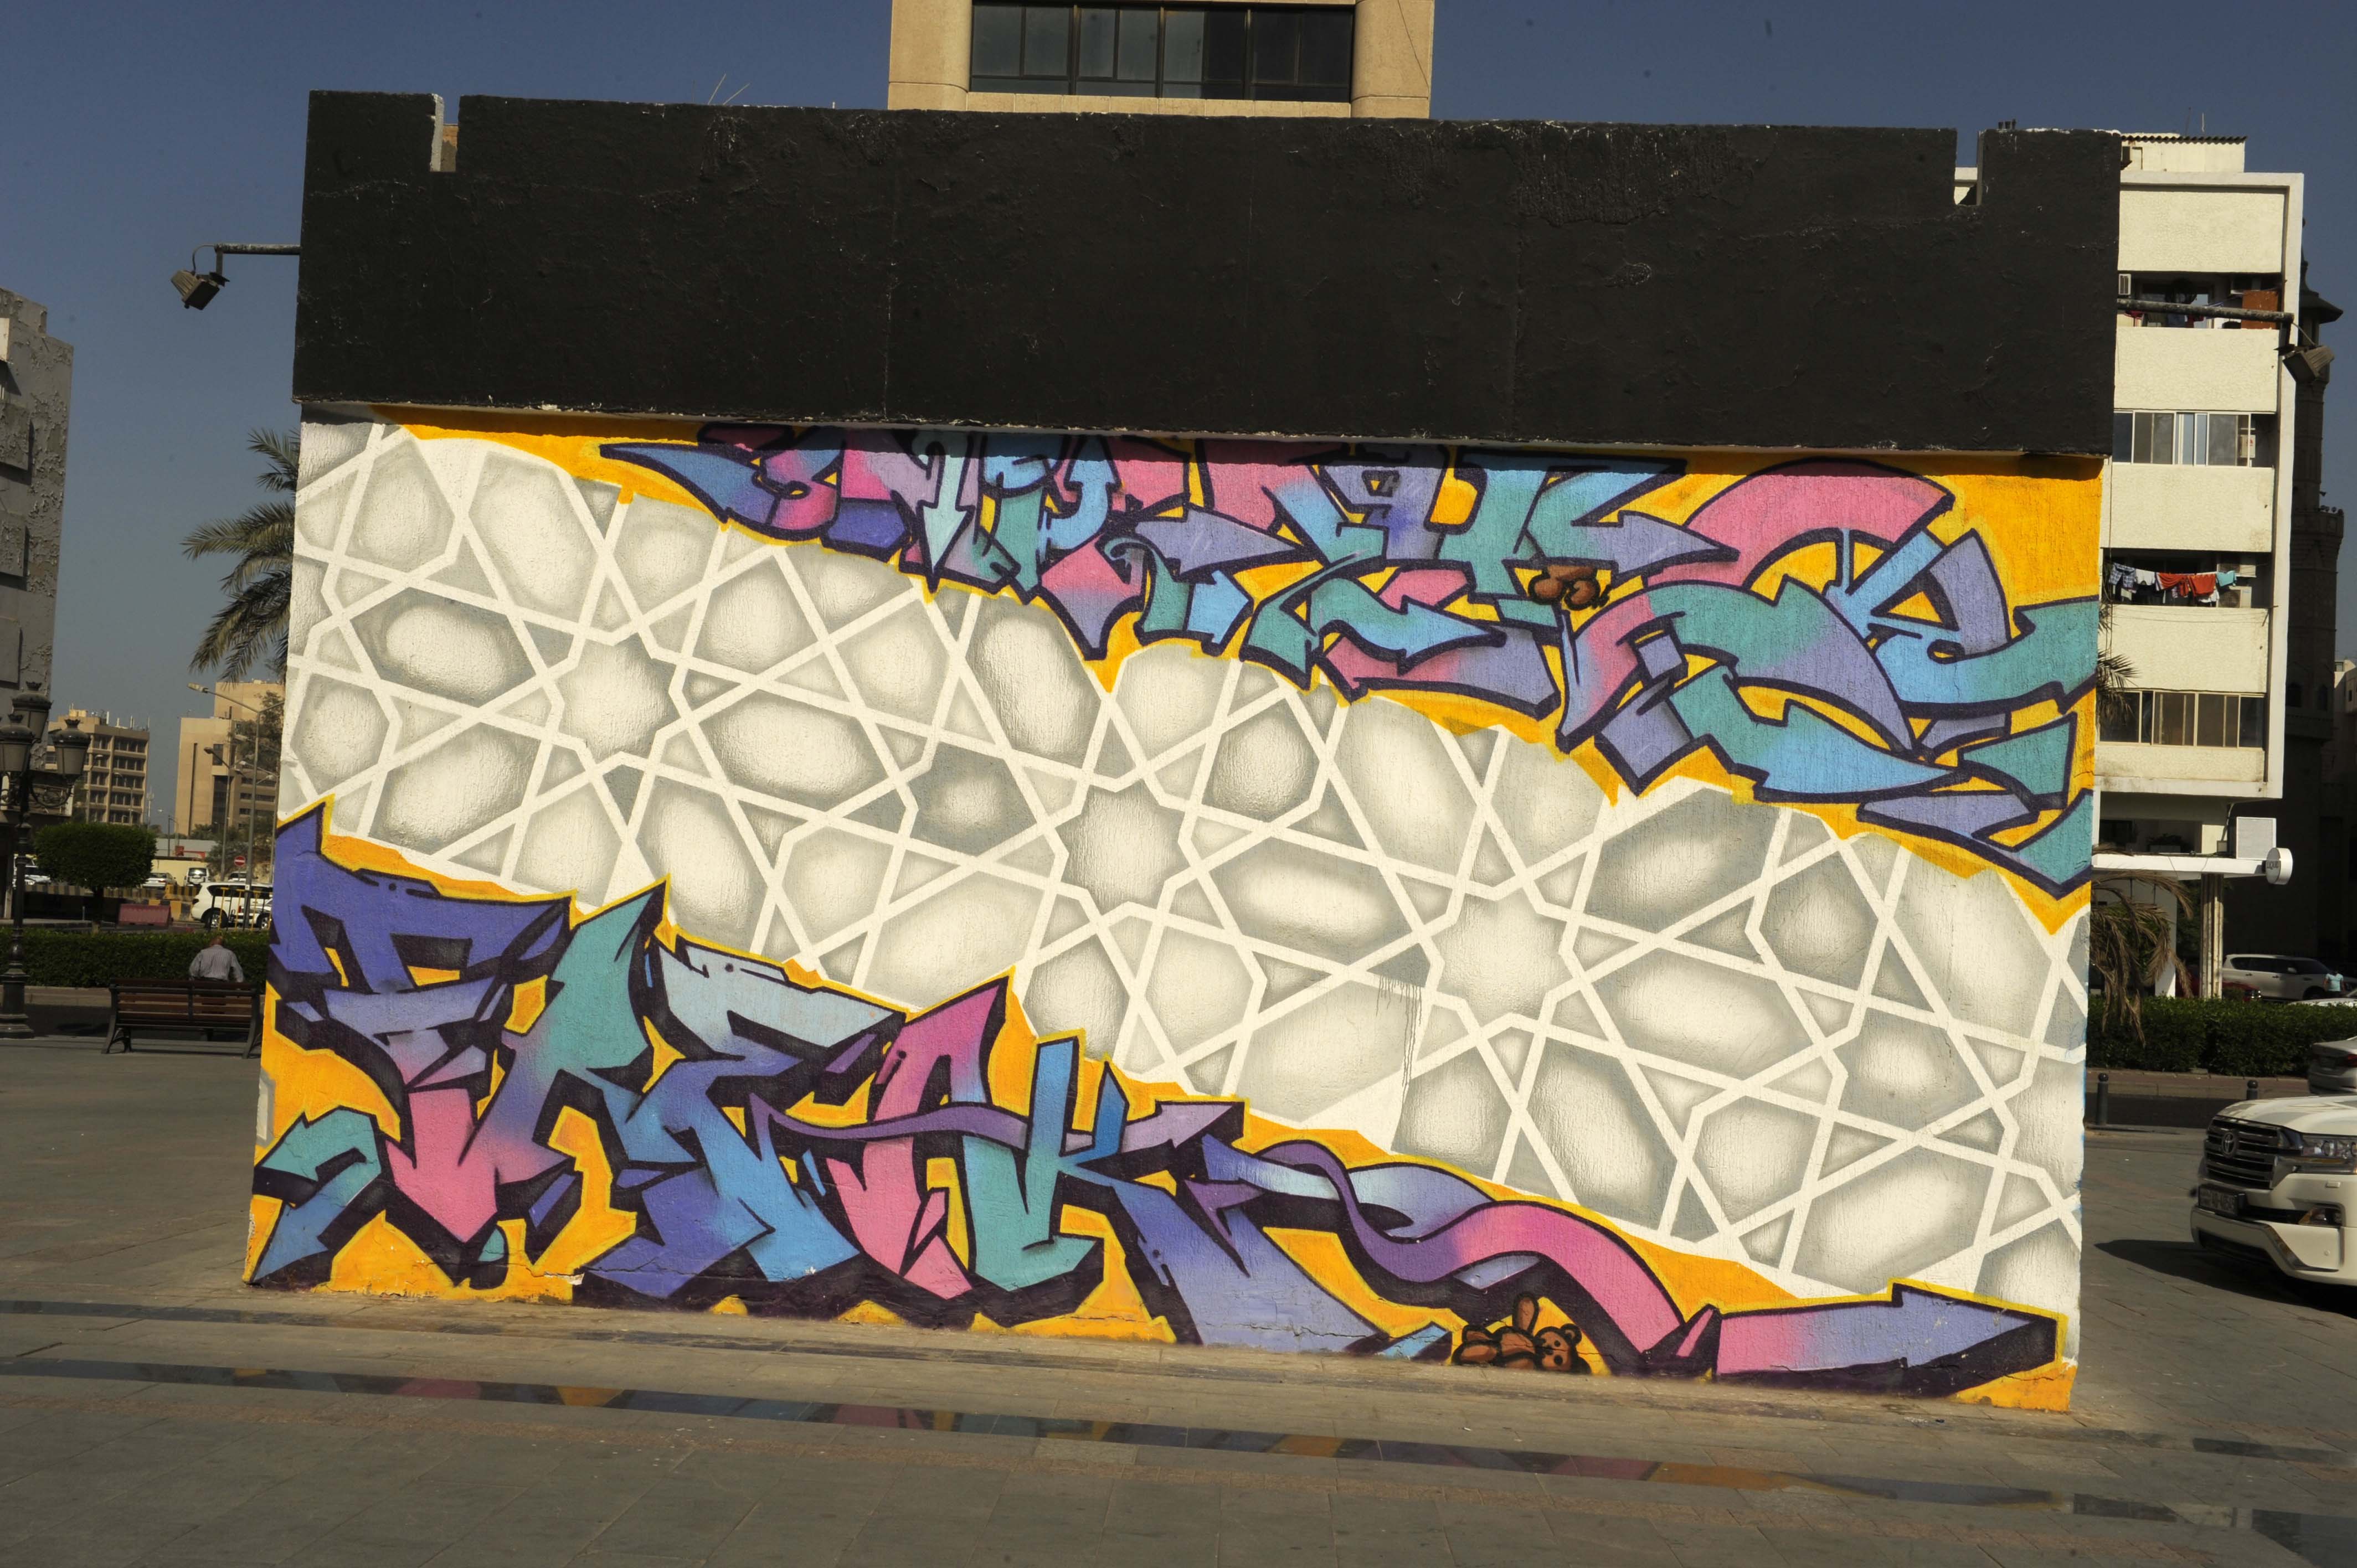 The Kuwaiti 'Jedareyat' team, a voluntary group aim at transforming walls in Kuwait into artistic drawings